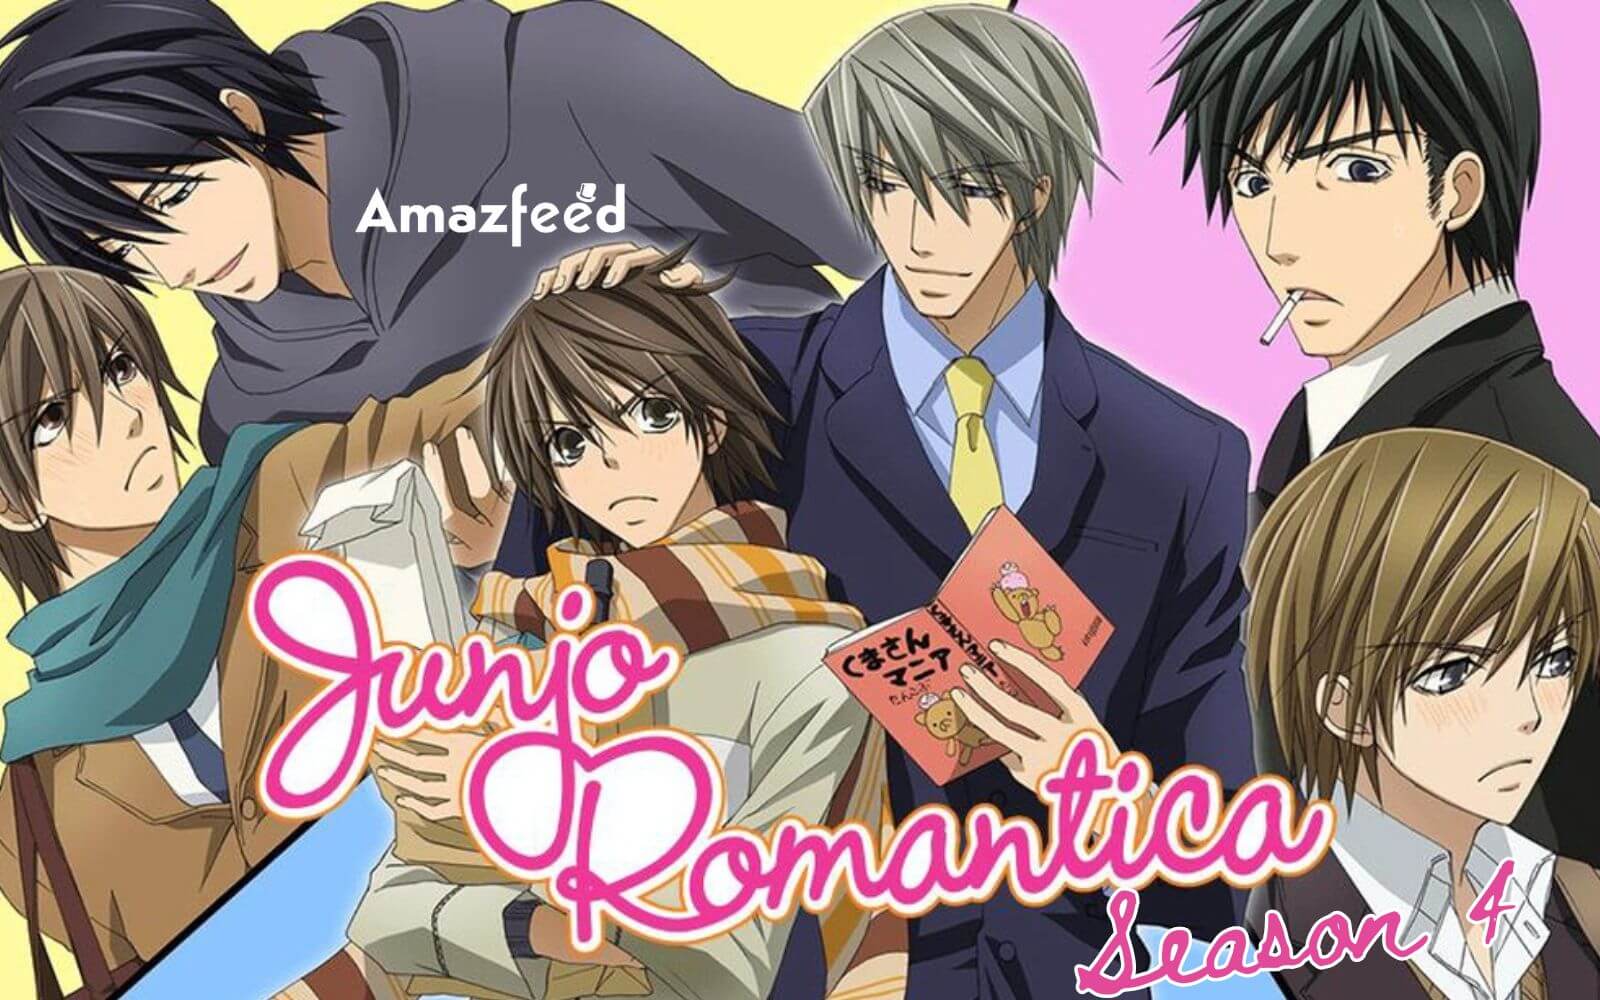 junjou romantica season 4 release